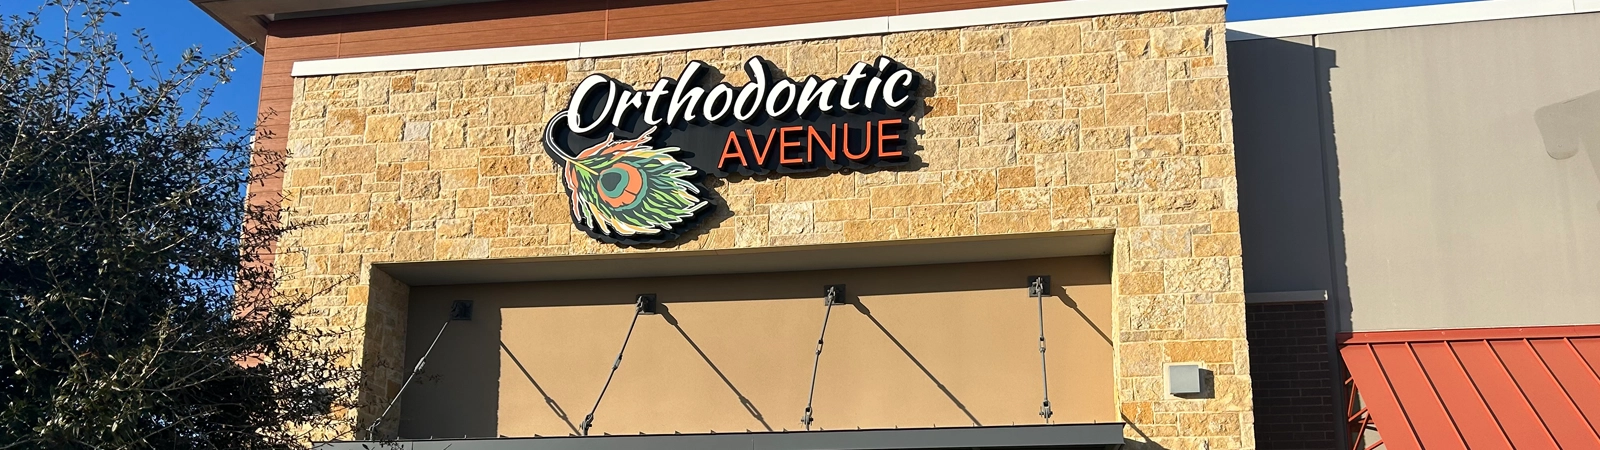 orthodontic avenue location